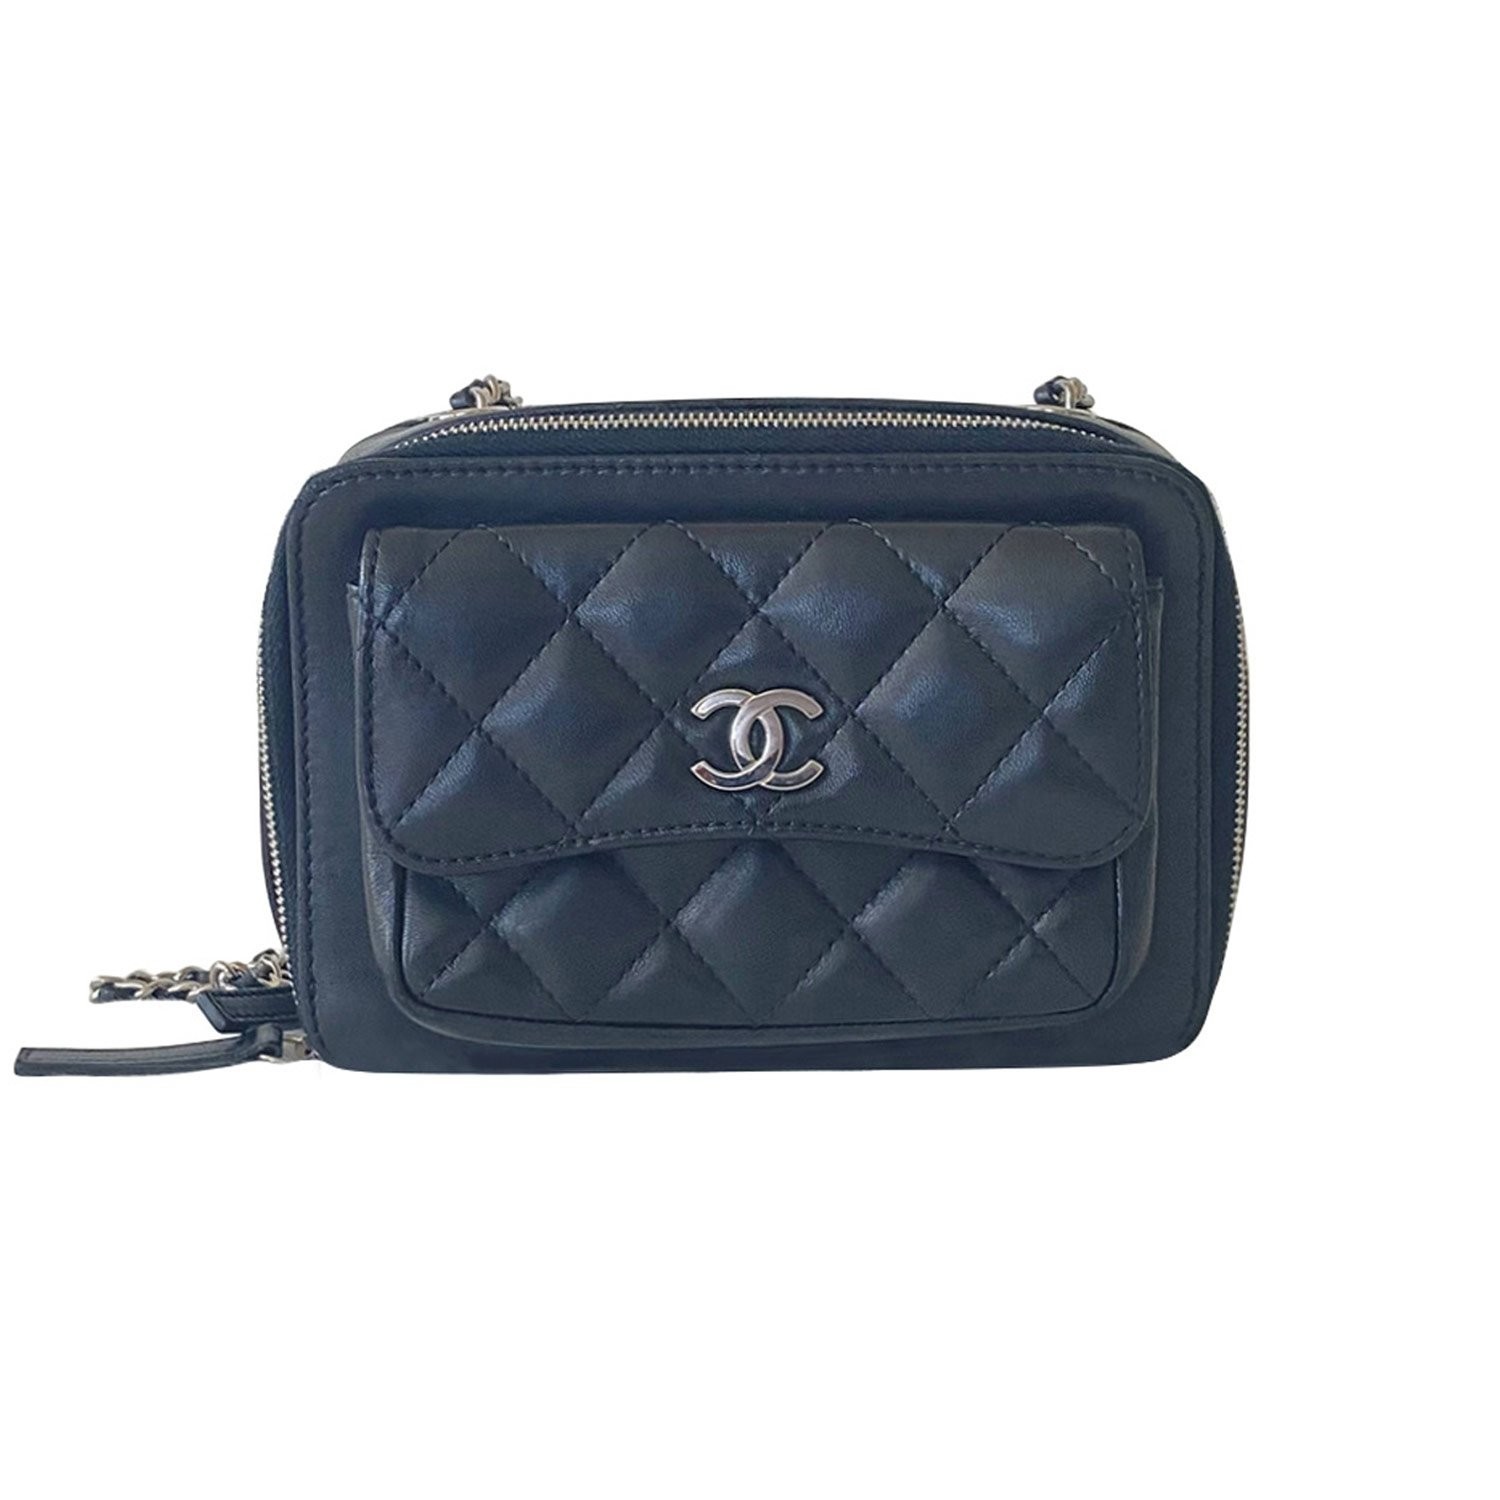 Buy Chanel Bags Australia Online at My Luxury Bargain